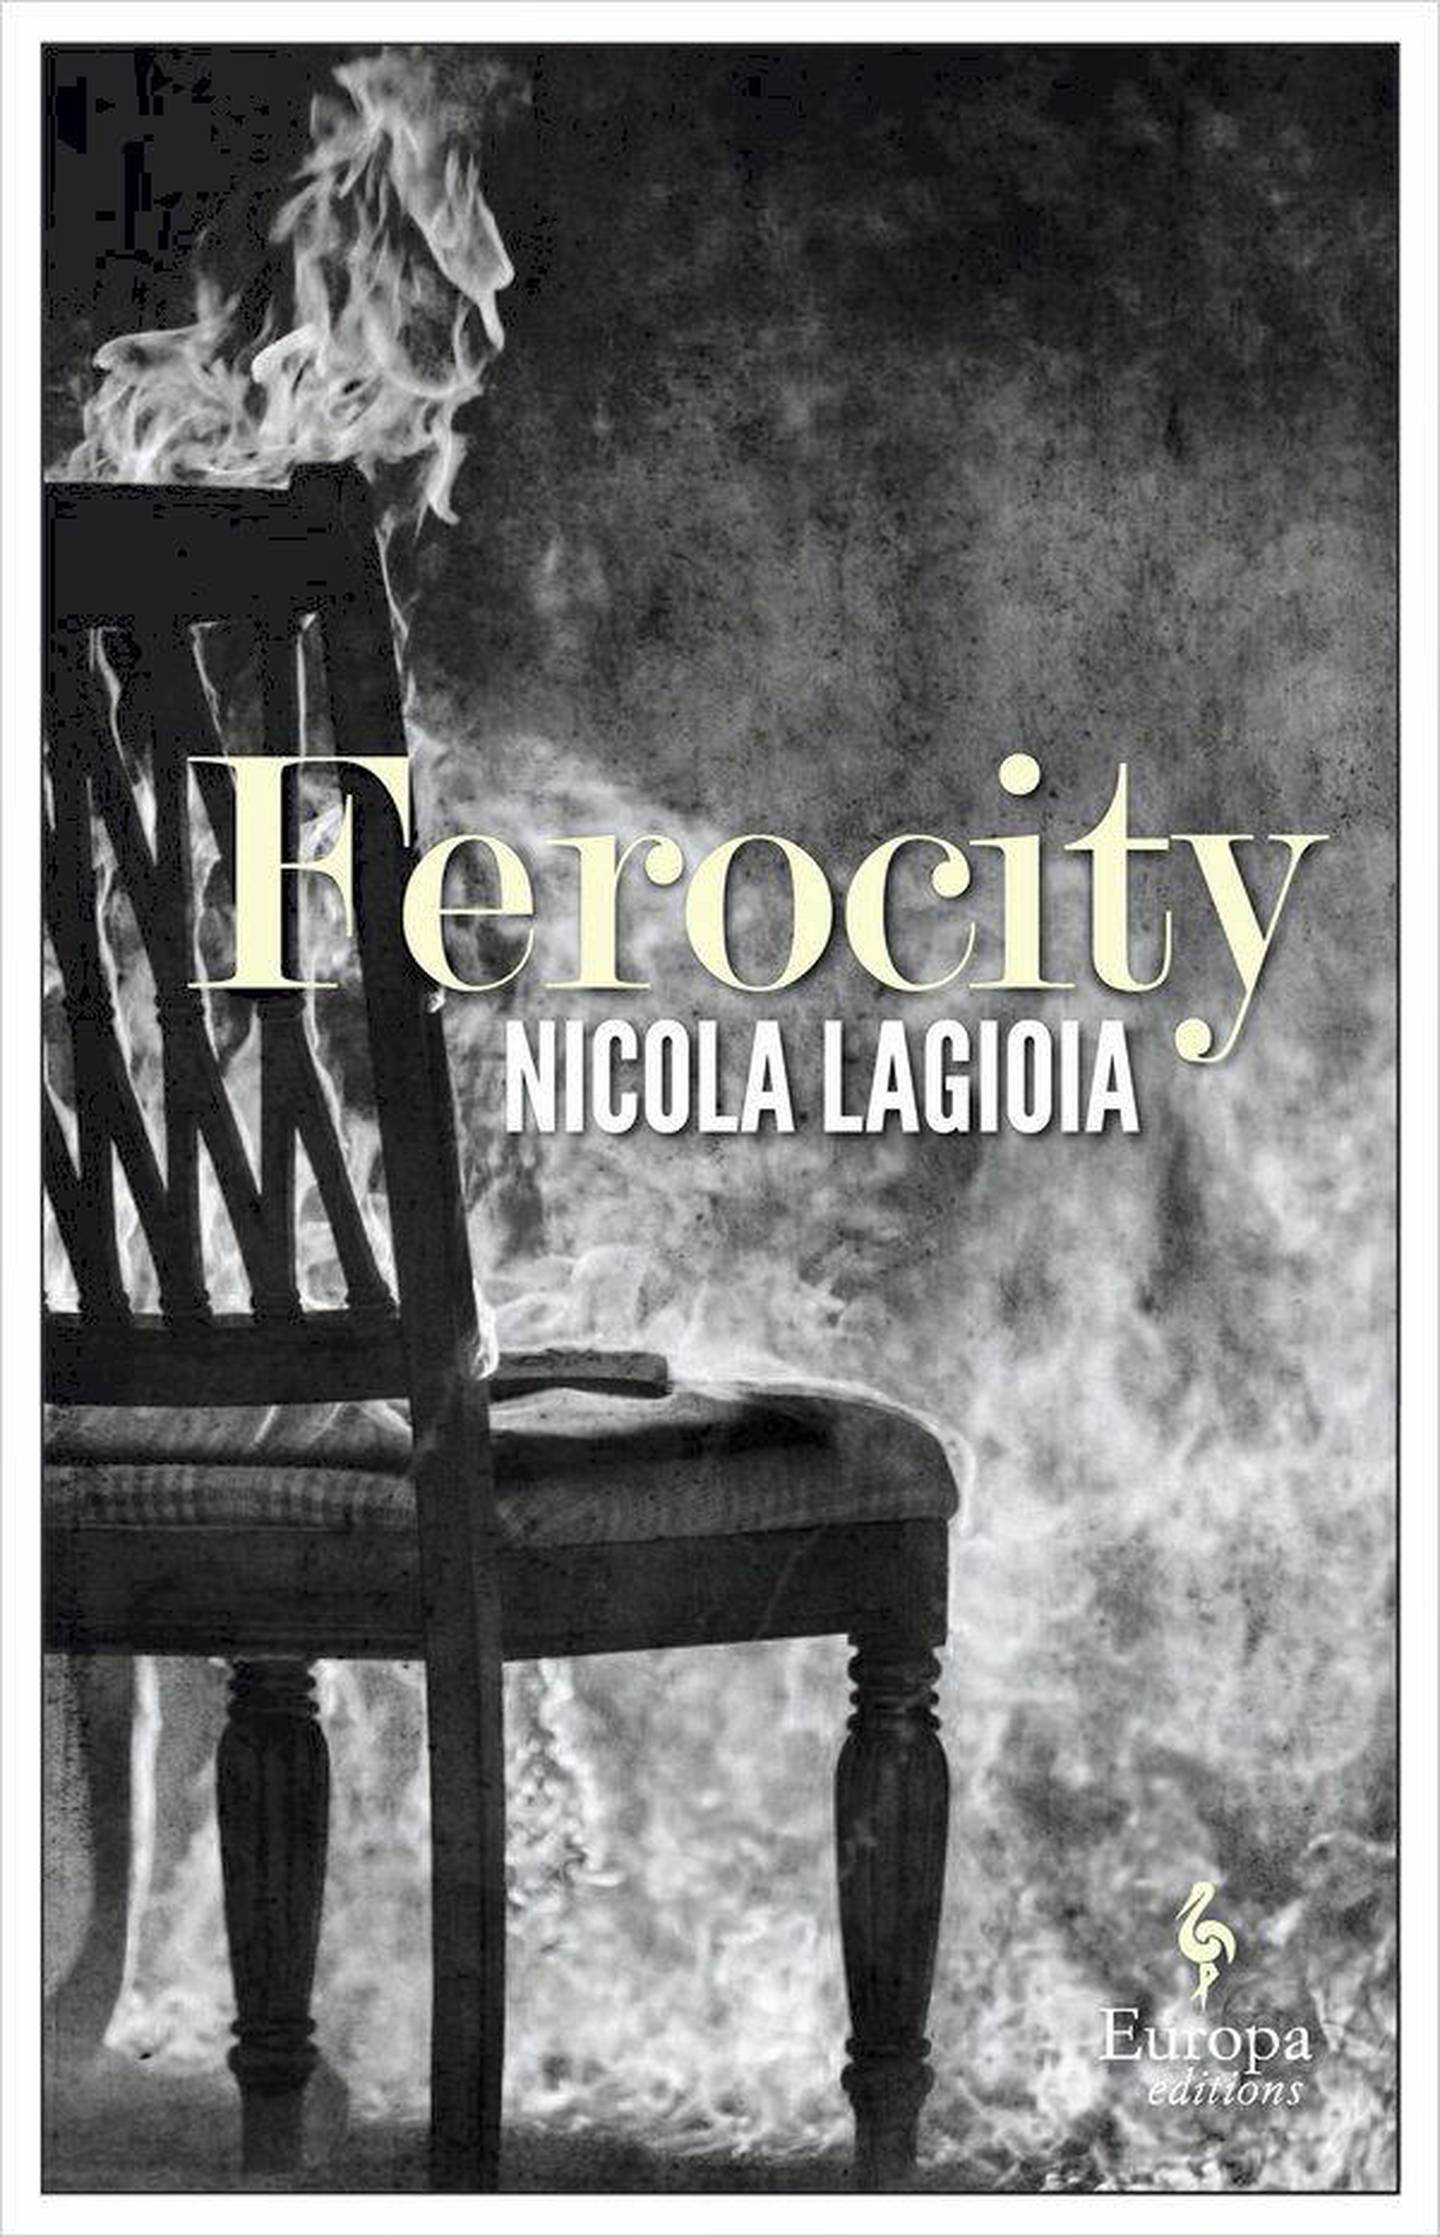 Ferocity by Nicola Lagioia. Courtesy Europa Editions